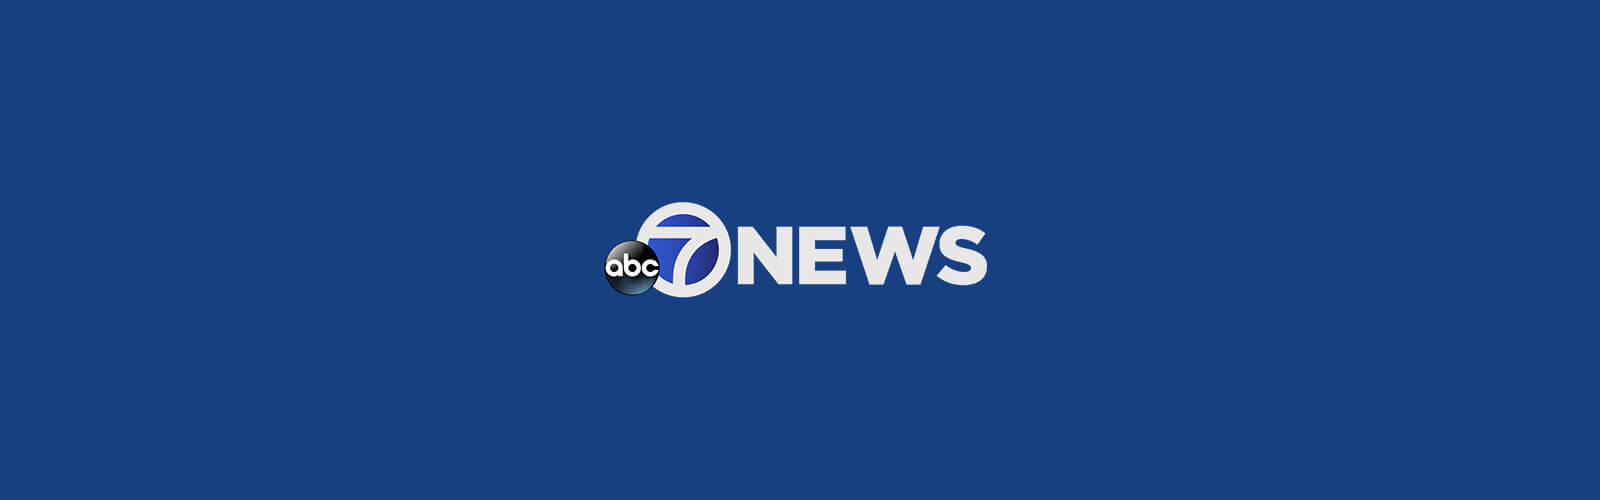 Image of the ABC news logo